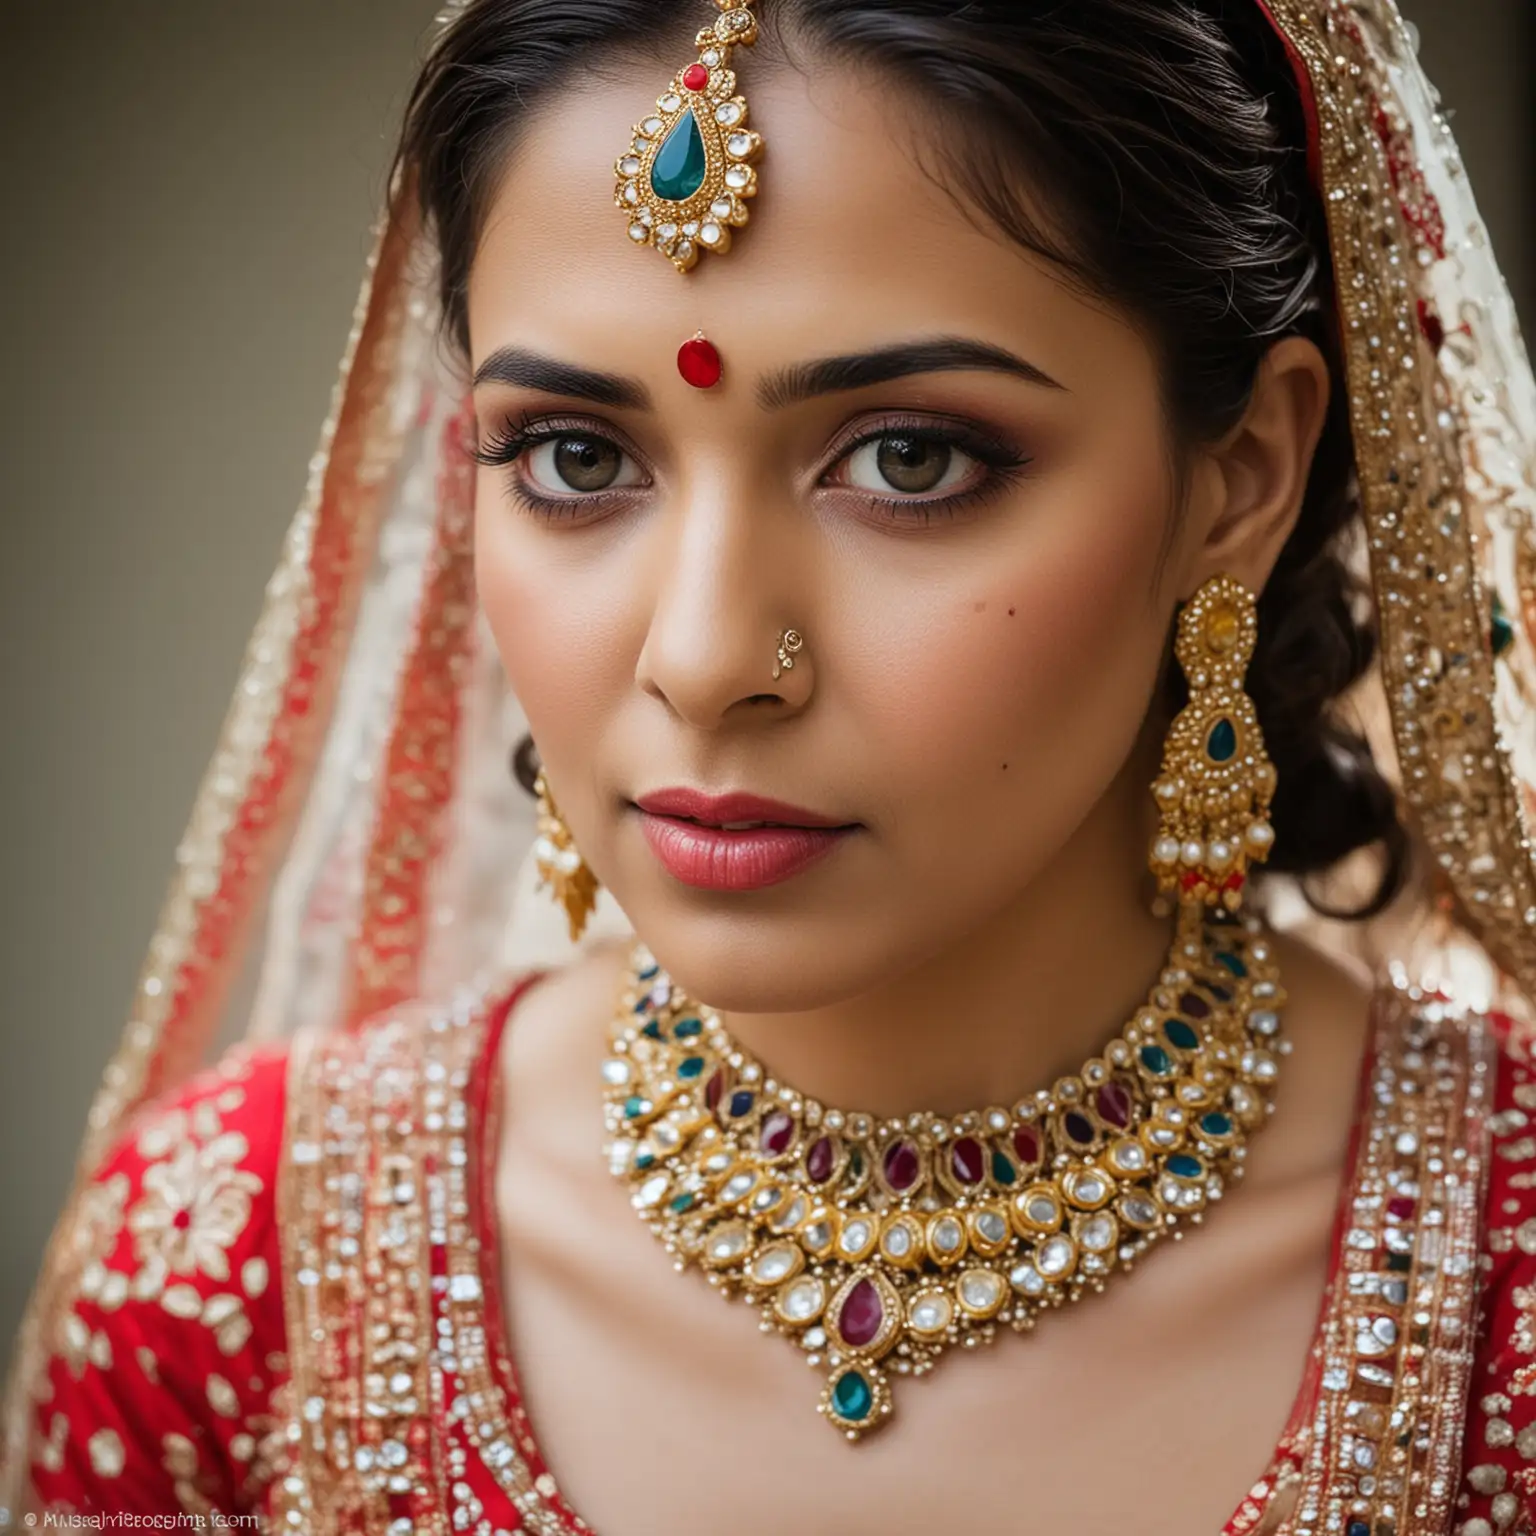 indian bride wearing colorful polki jewelry